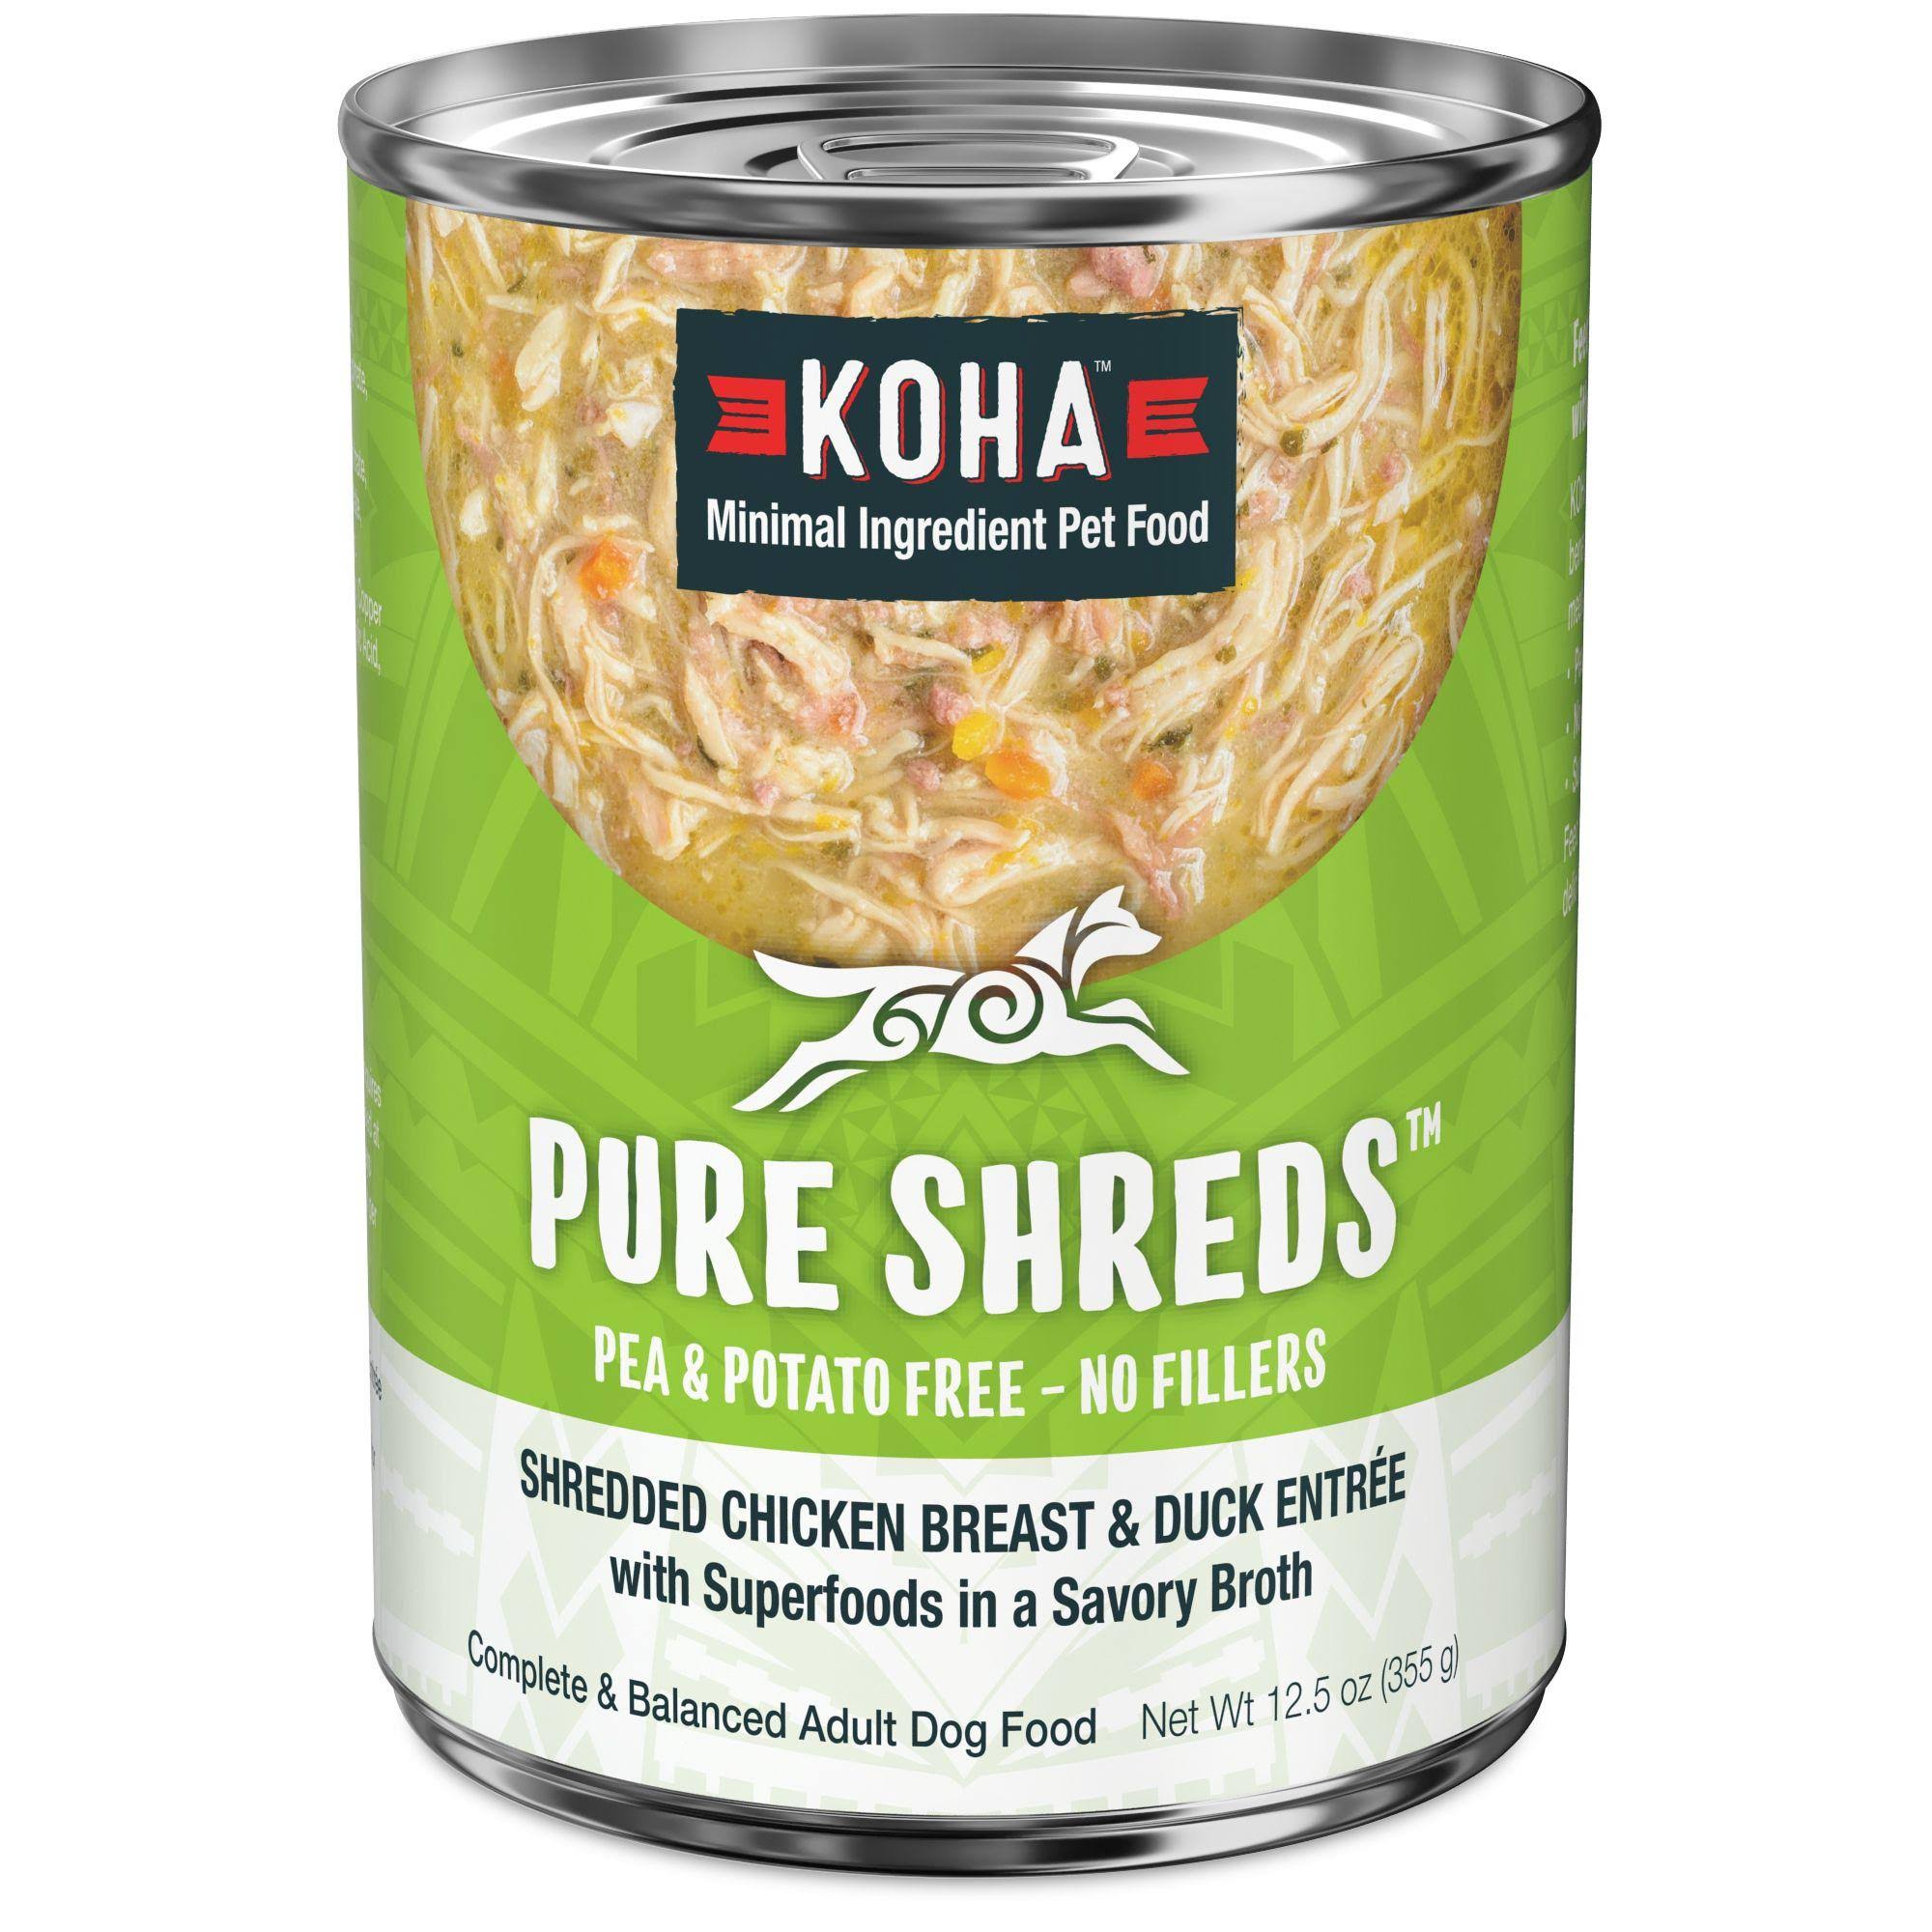 Koha Pure Shreds Shredded Chicken Breast & Duck Entree Dog Food